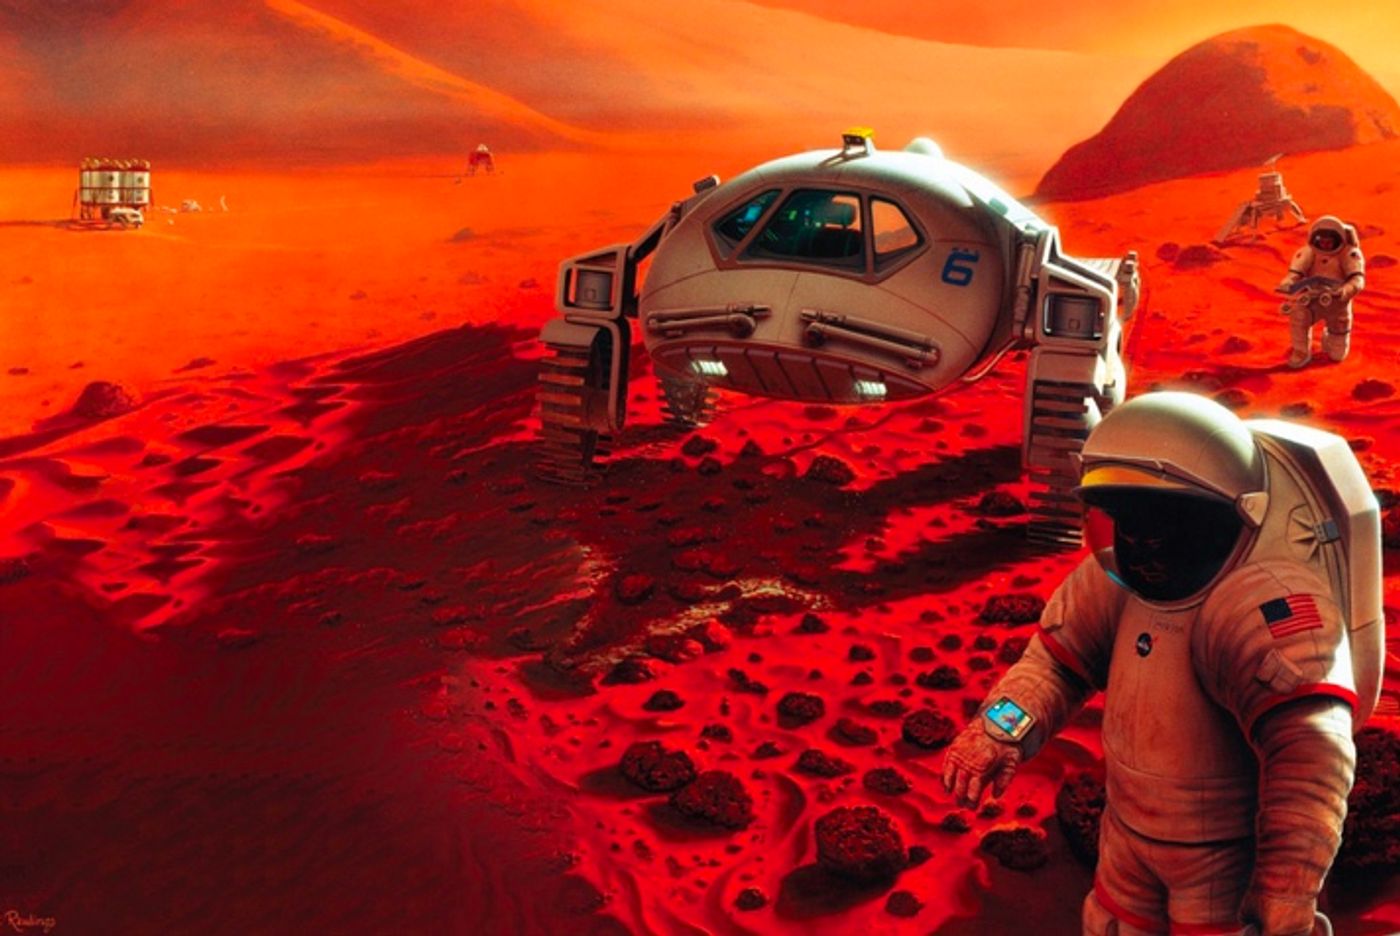 An artist's impression of astronauts walking on Mars.